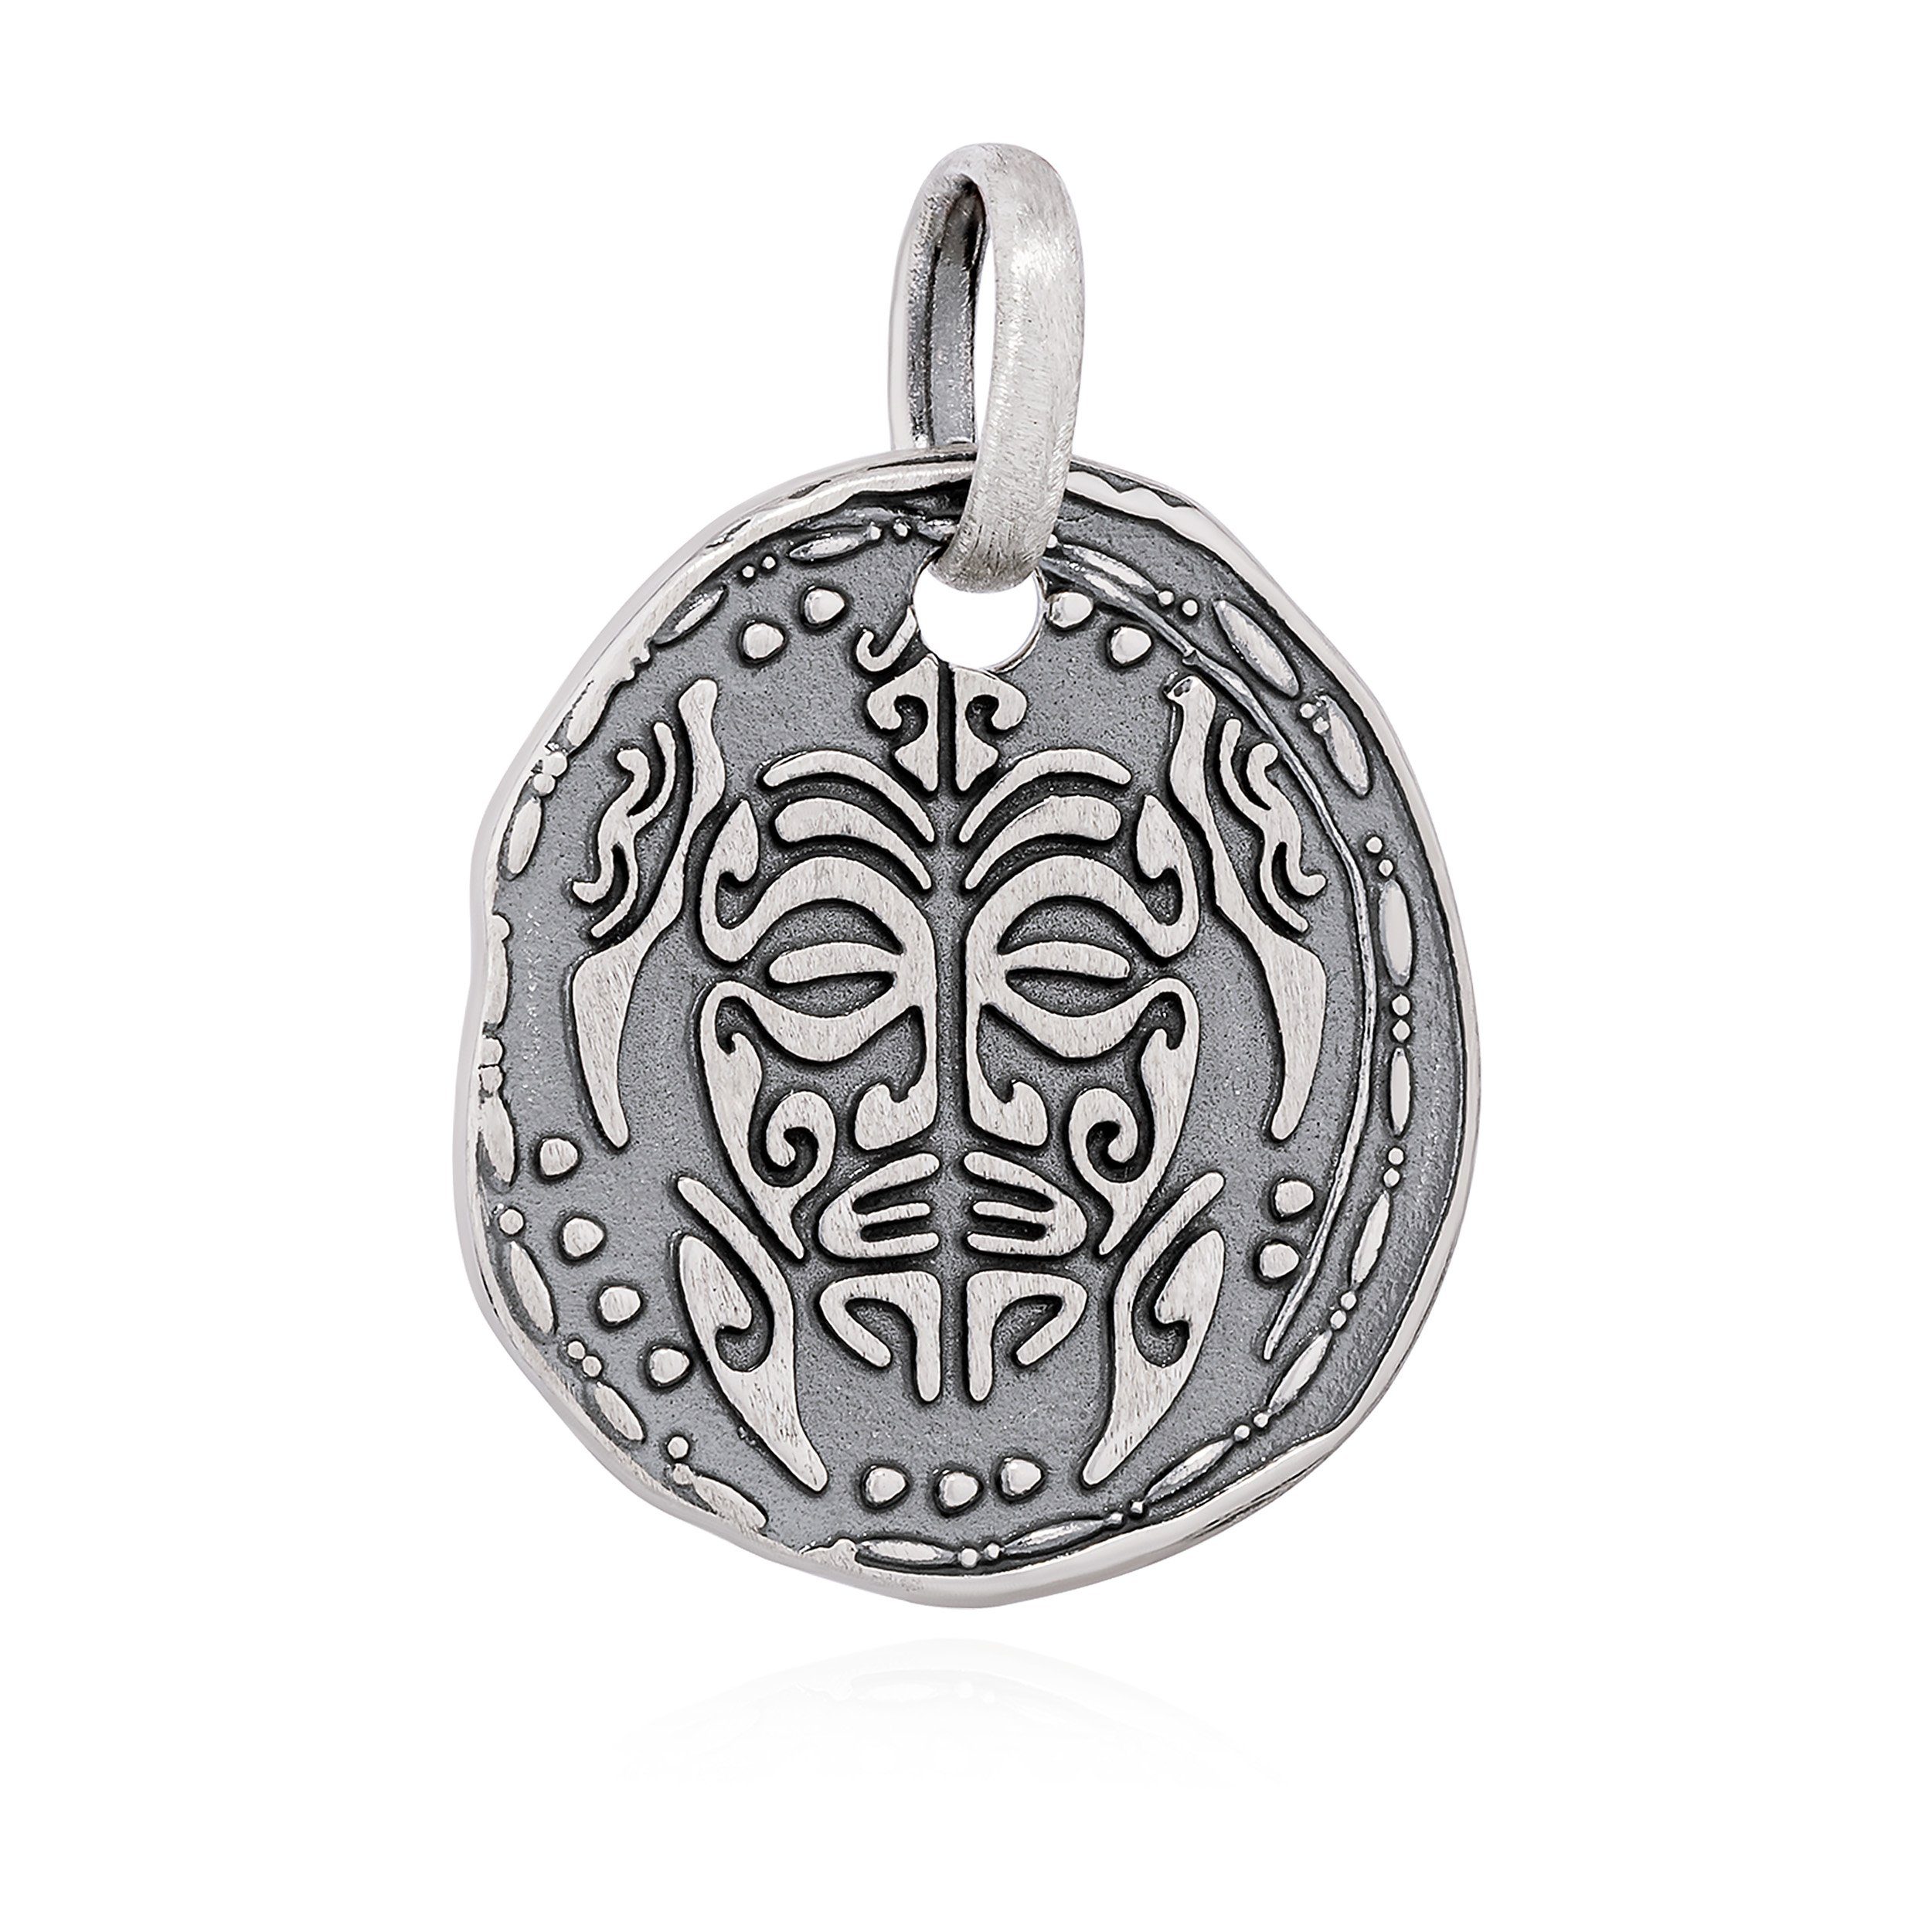 NKlaus Kettenanhänger 23cm Kettenanhänger Schildkröte Silber 925 Maori Schutzsymbol Sterling